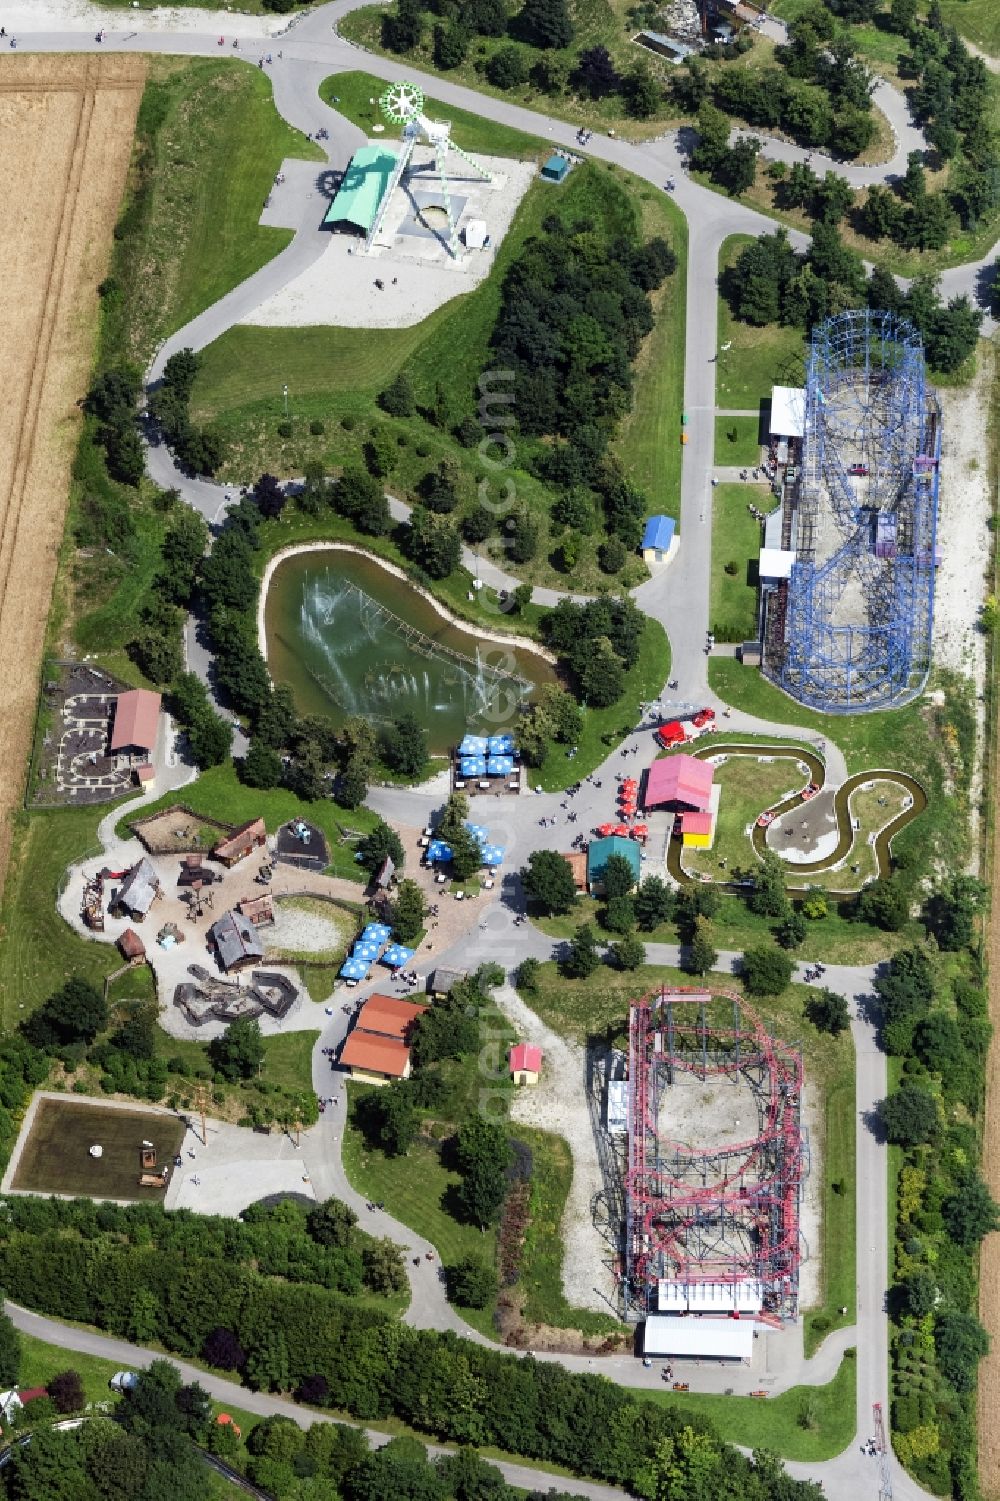 Bad Wörishofen from above - Leisure Centre - Amusement Park Allgaeu Skyline Park in Bad Woerishofen in the state Bavaria, Germany